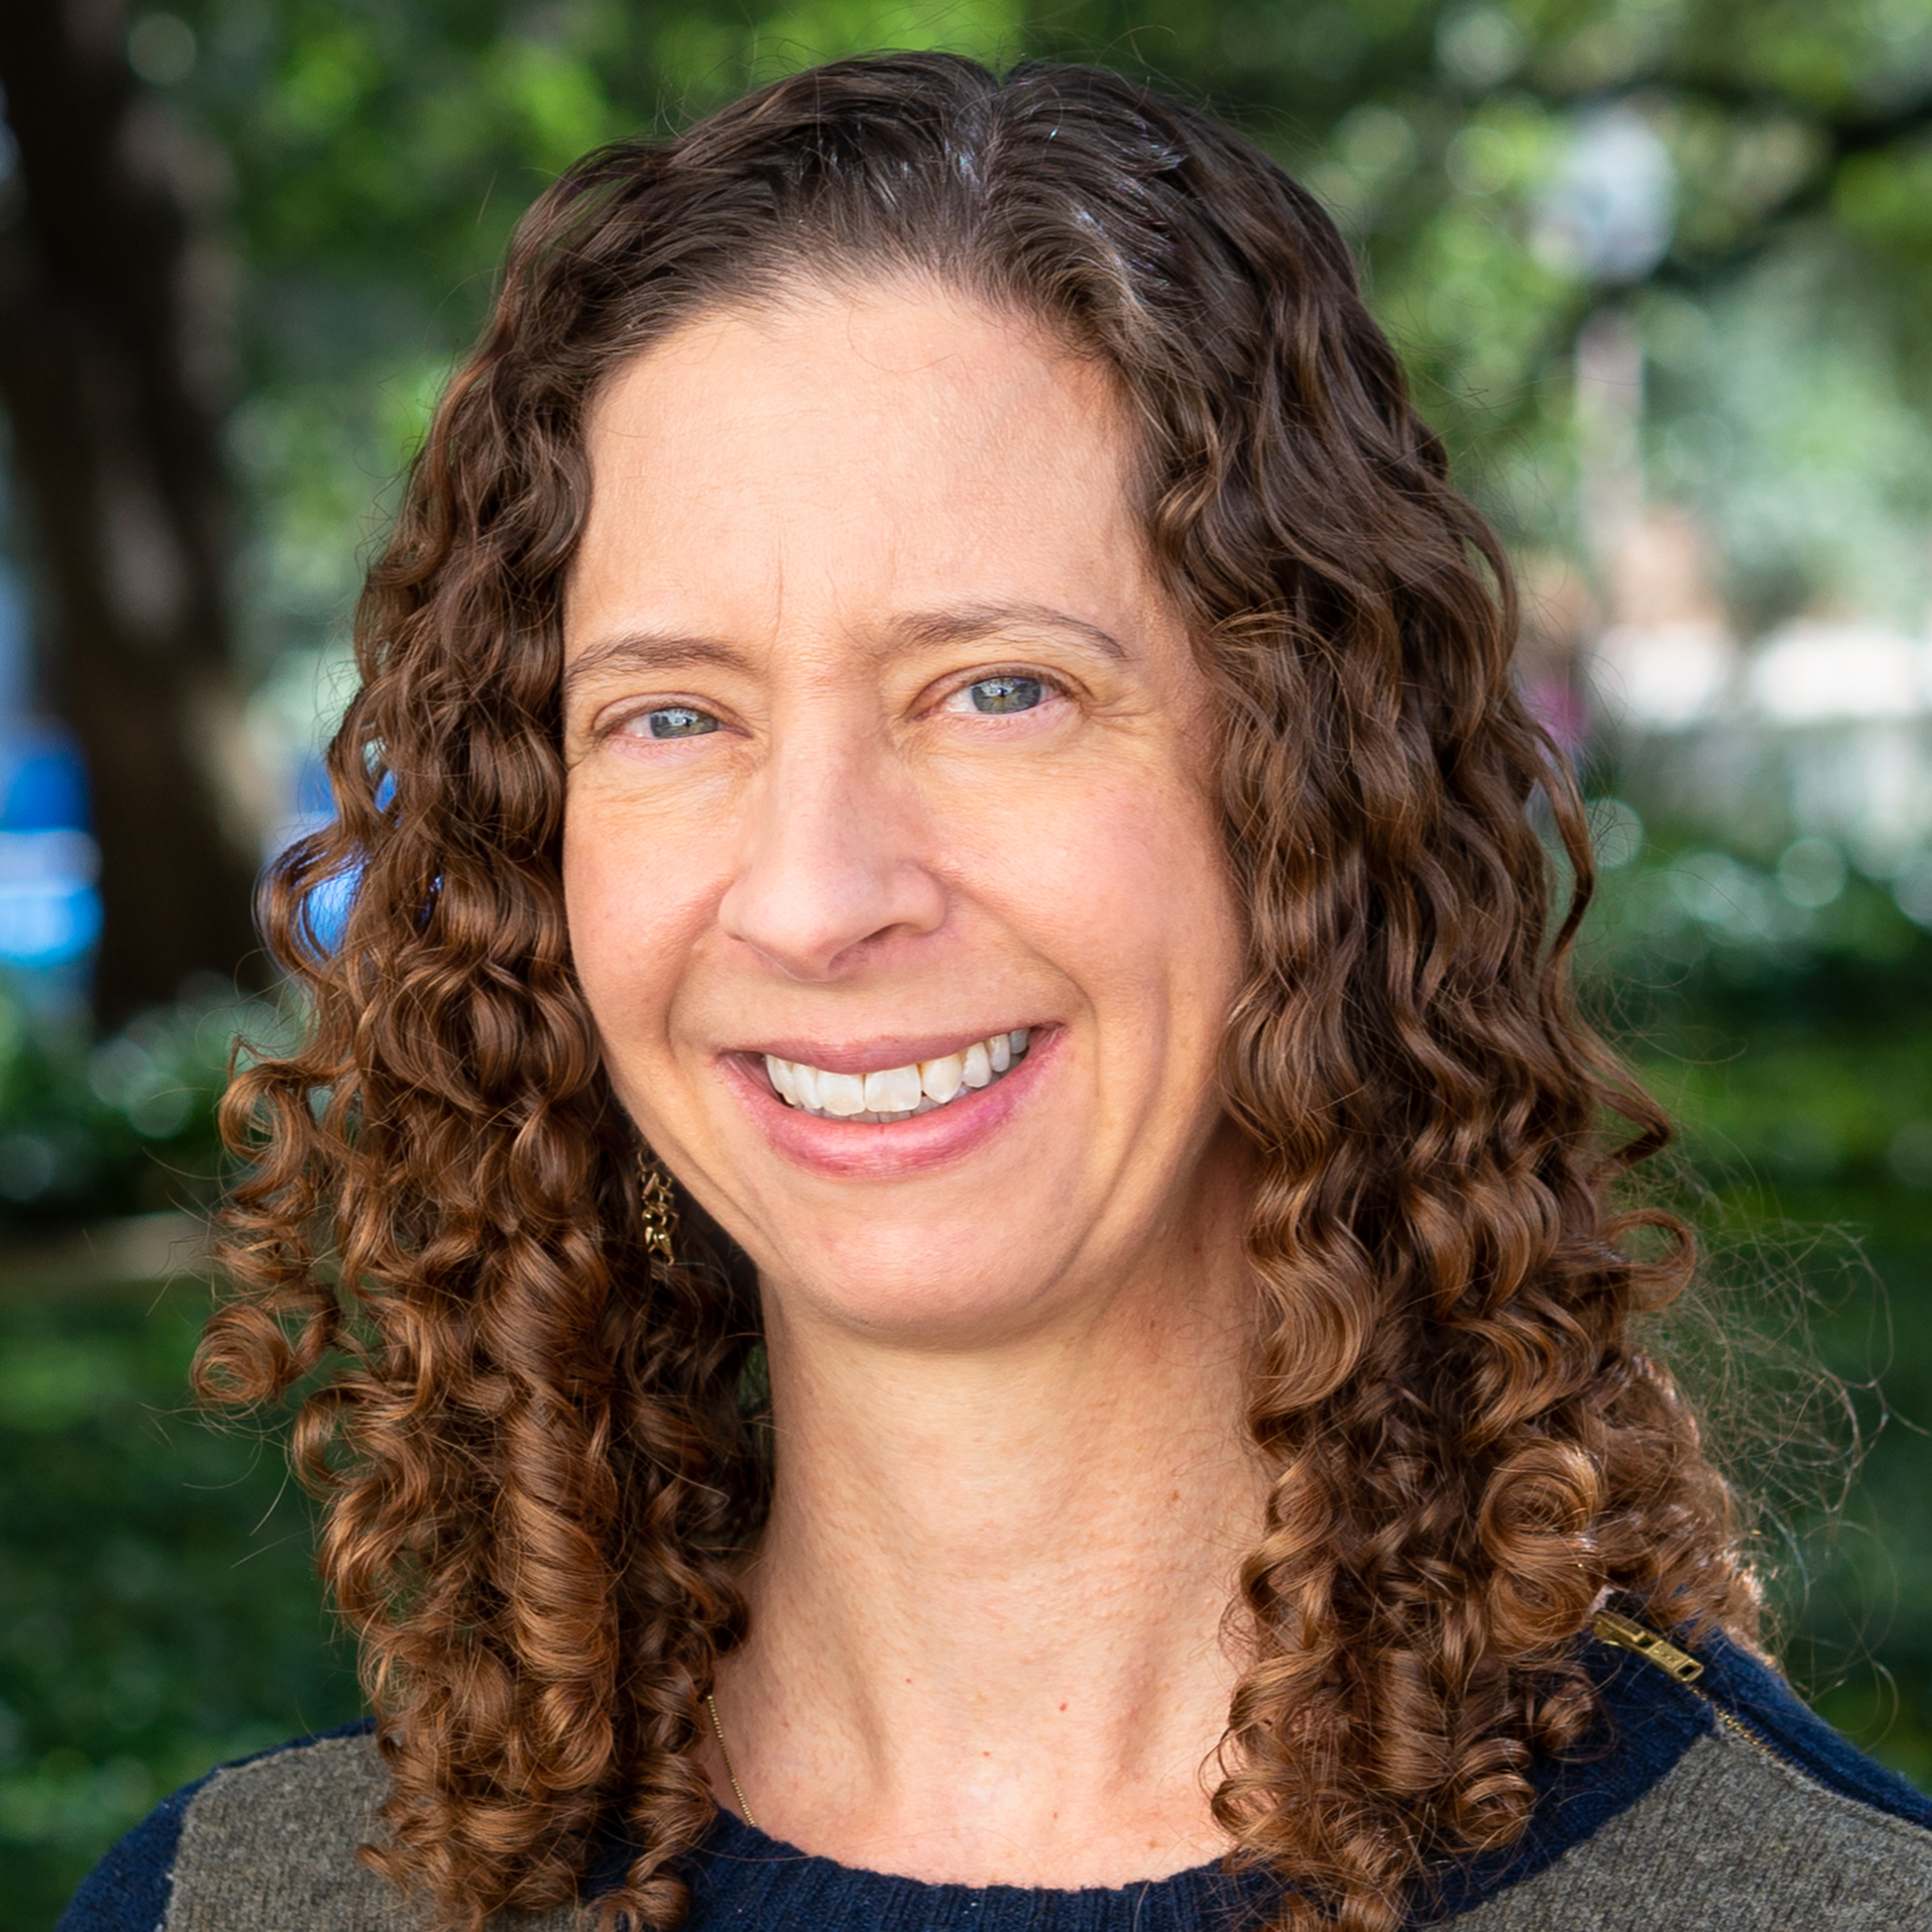 Profile image of Lauren I. Ehrlich